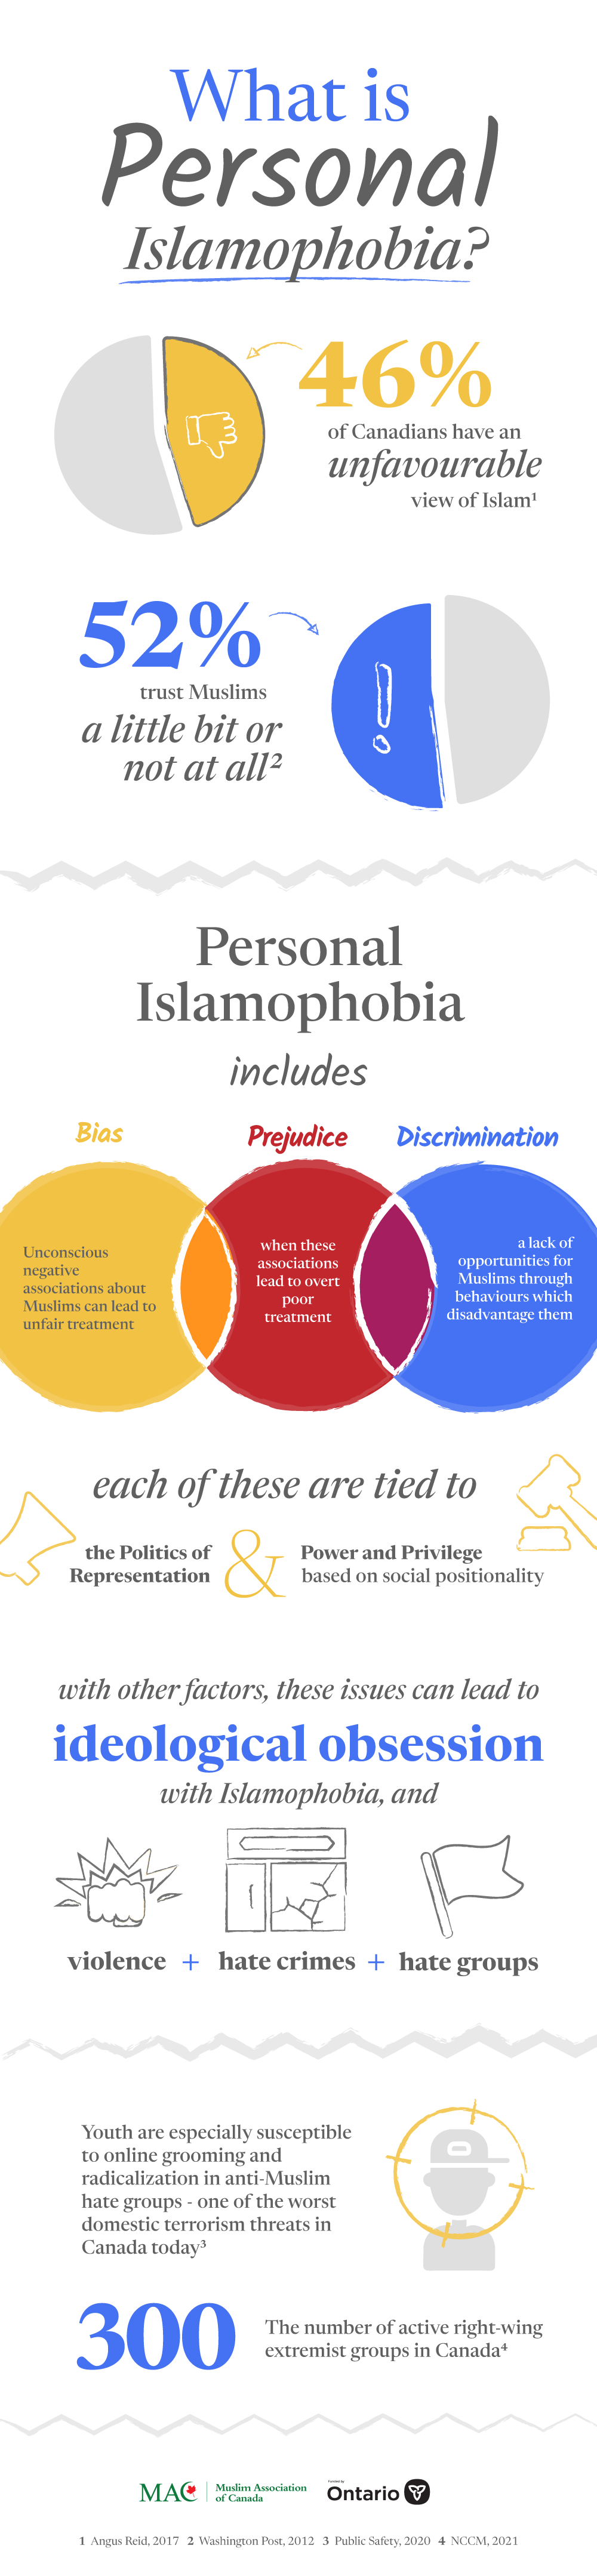 What is personal Islamophobia